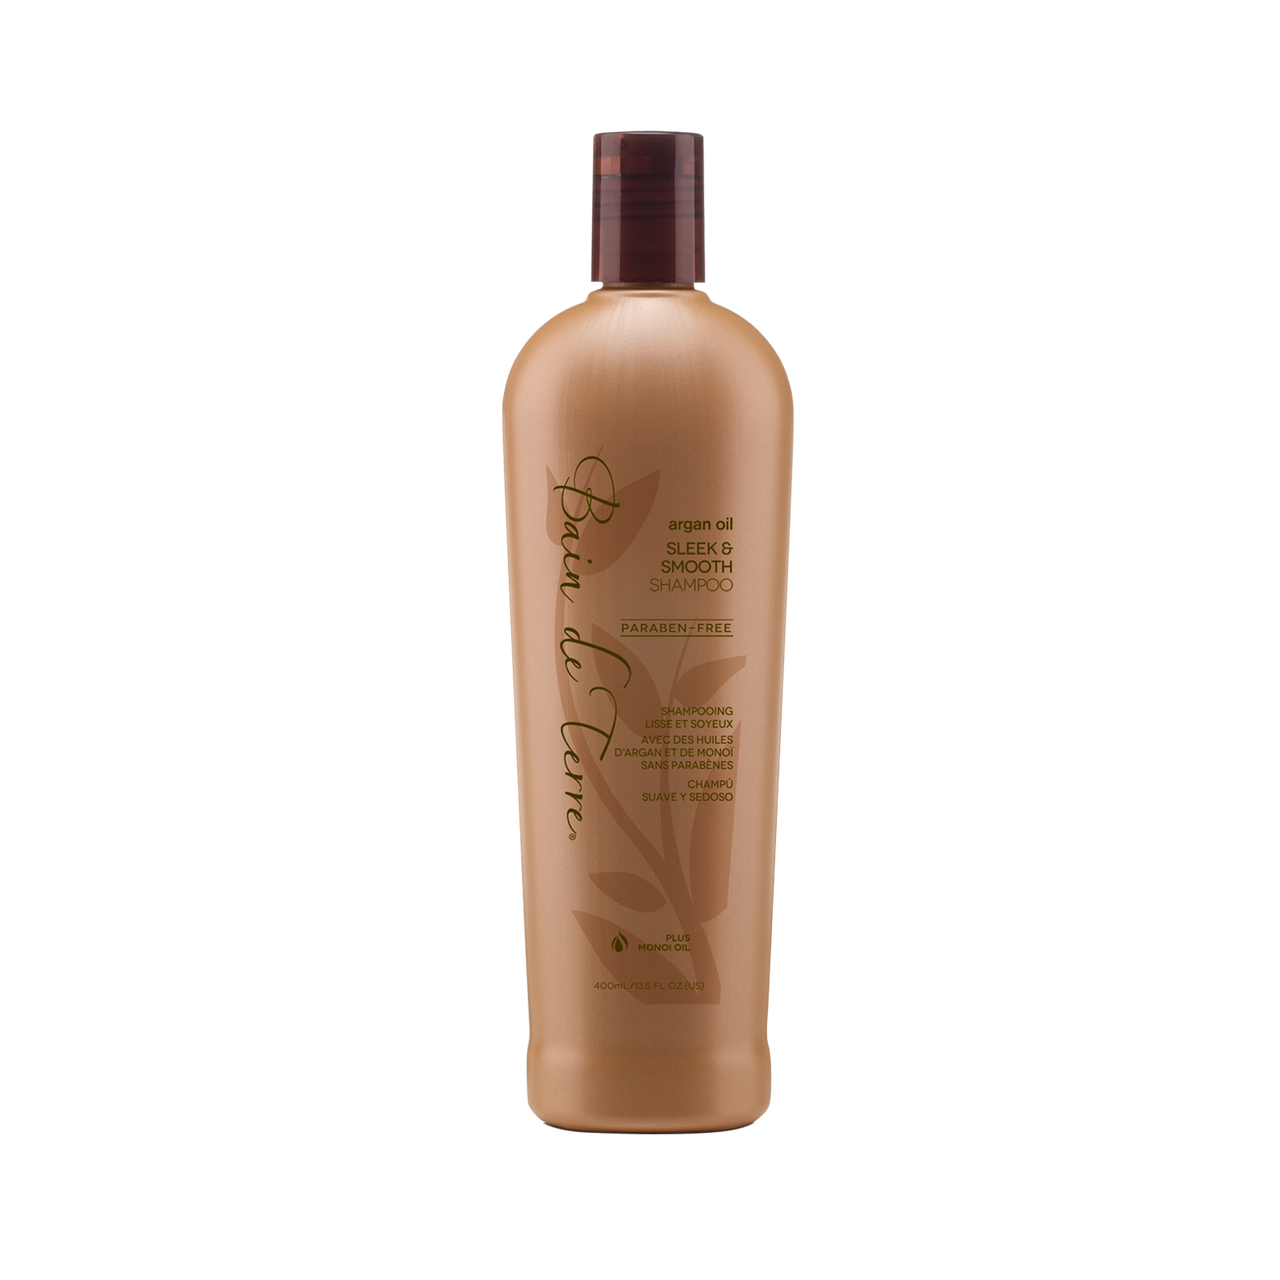 Bain de Terre Argan Oil Sleek & Smooth Shampoo 13.5 fl oz